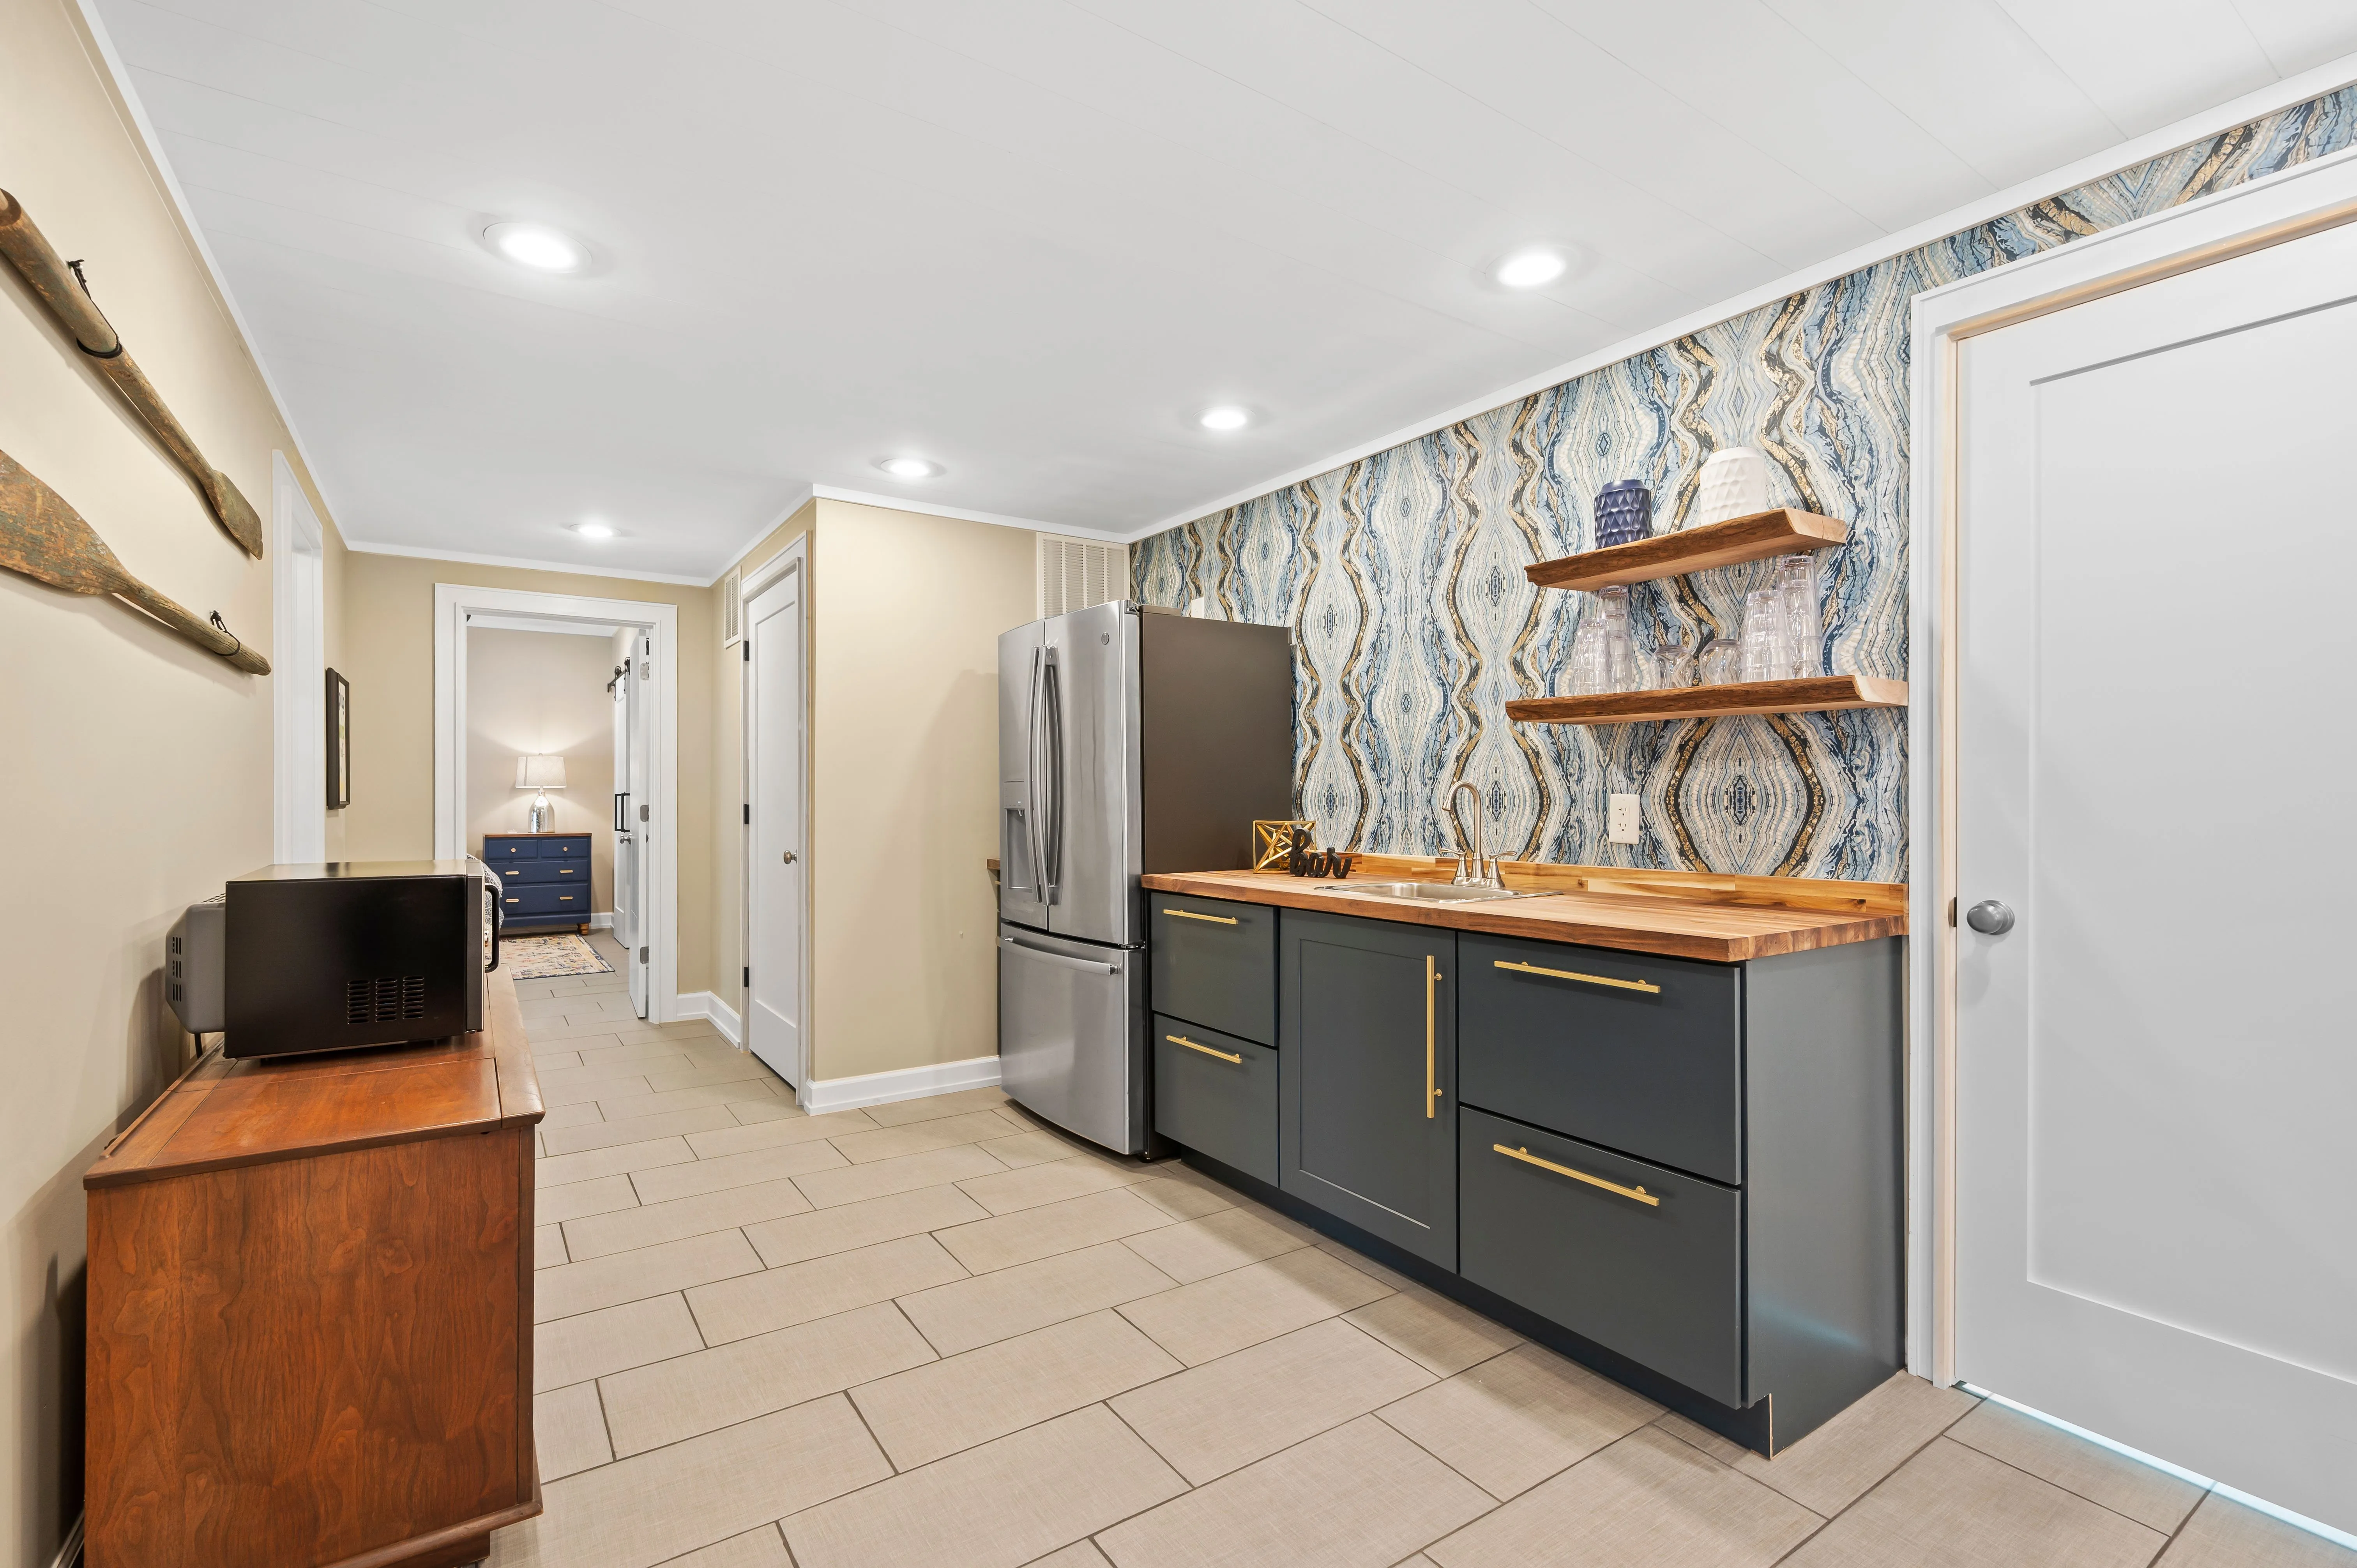 Modern hallway interior with decorative blue pattern wallpaper, dark kitchen cabinetry, wooden shelves, and tiled floor.